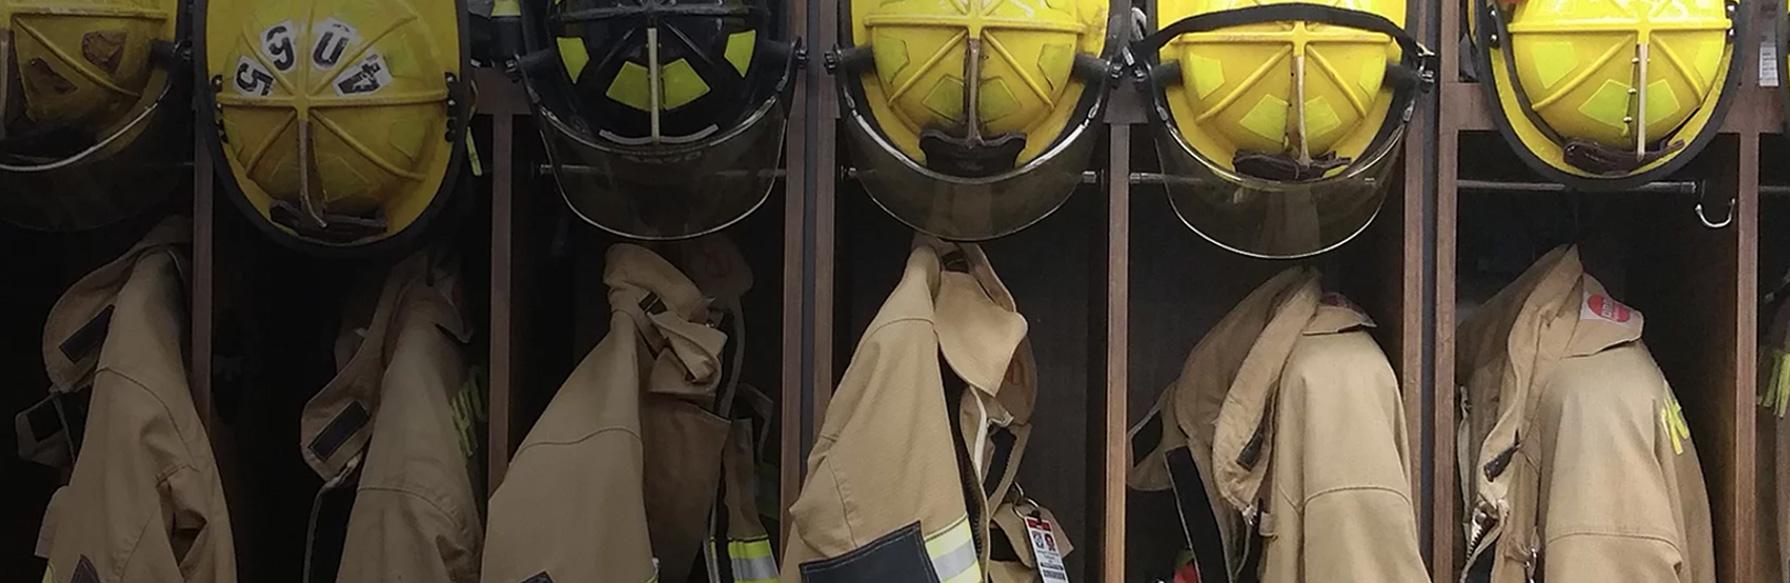 First Responders Program - Fire Department Suits & Helmuts